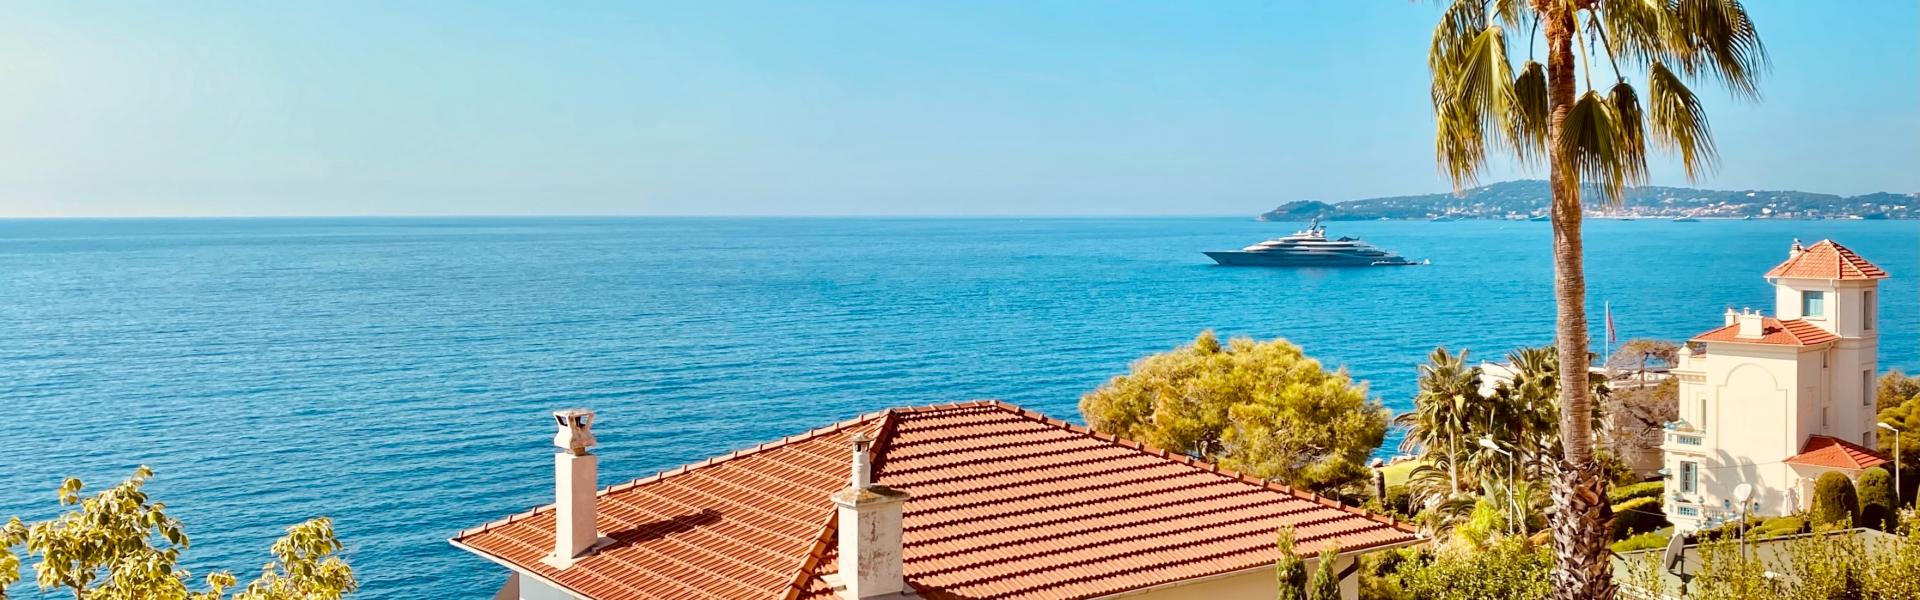 Location de vacances avec piscine Le Cap d'Agde - Vacances.com